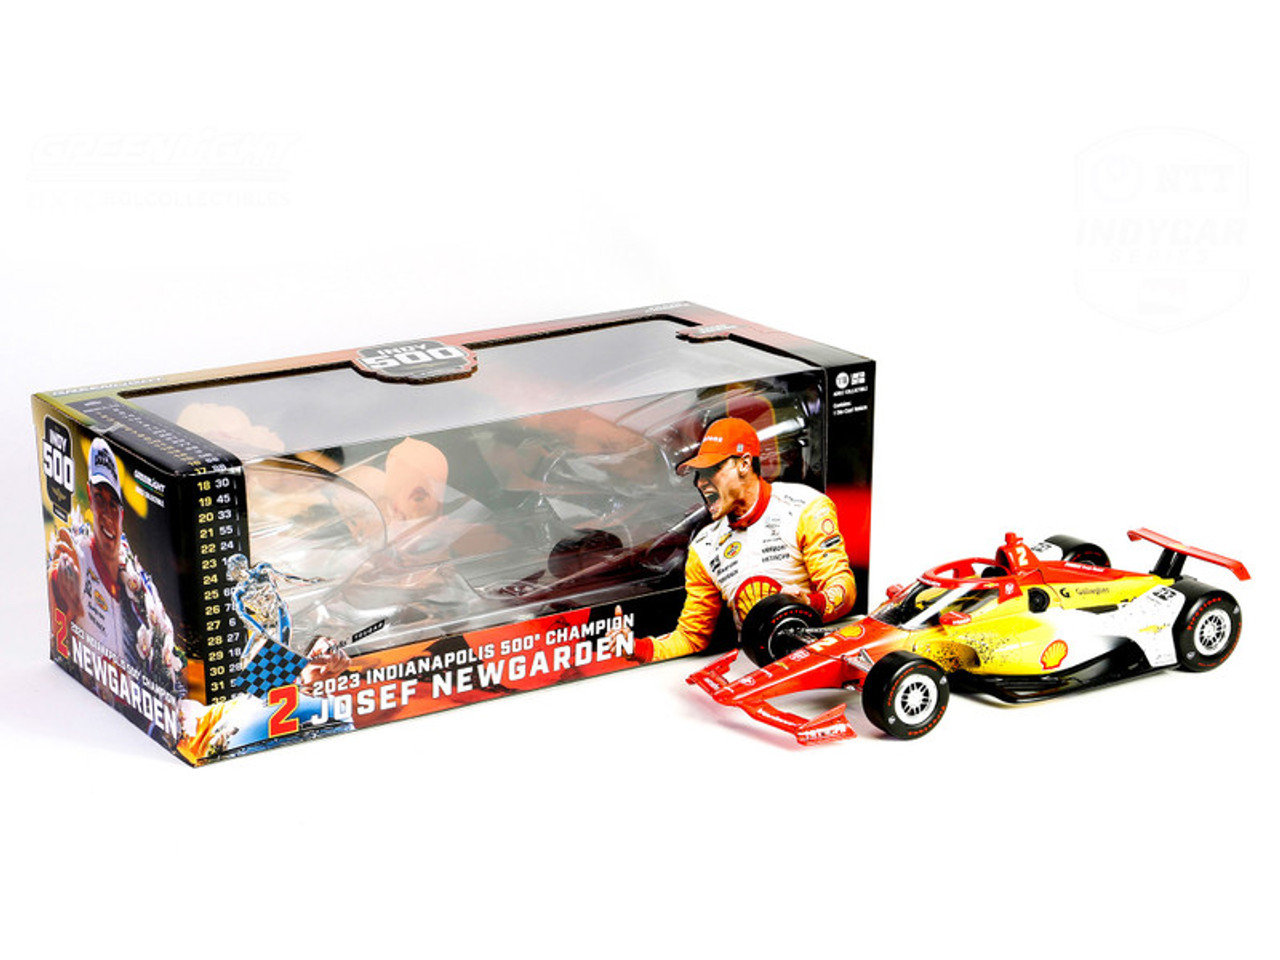 Dallara IndyCar #2 Josef Newgarden "Shell Oil" Team Penske "2023 Indianapolis 500 Champion" (Raced Version) "NTT IndyCar Series" (2023) 1/18 Diecast Model Car by Greenlight